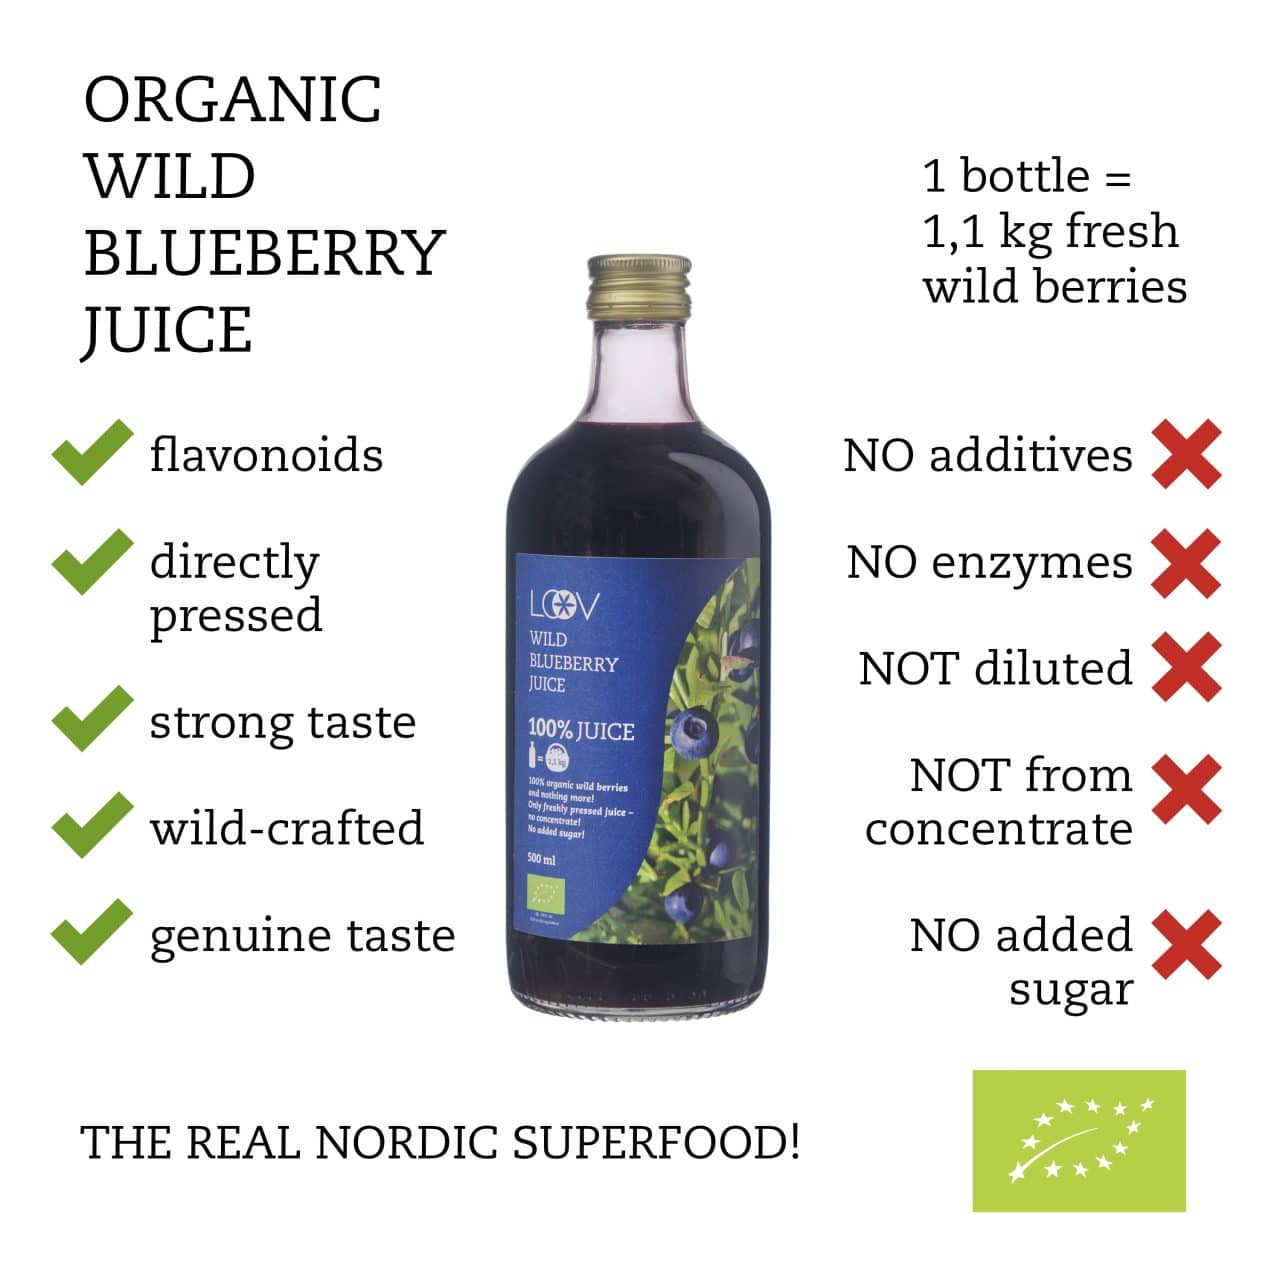 LOOV Wild Blueberry Juice - RealLifeHealing